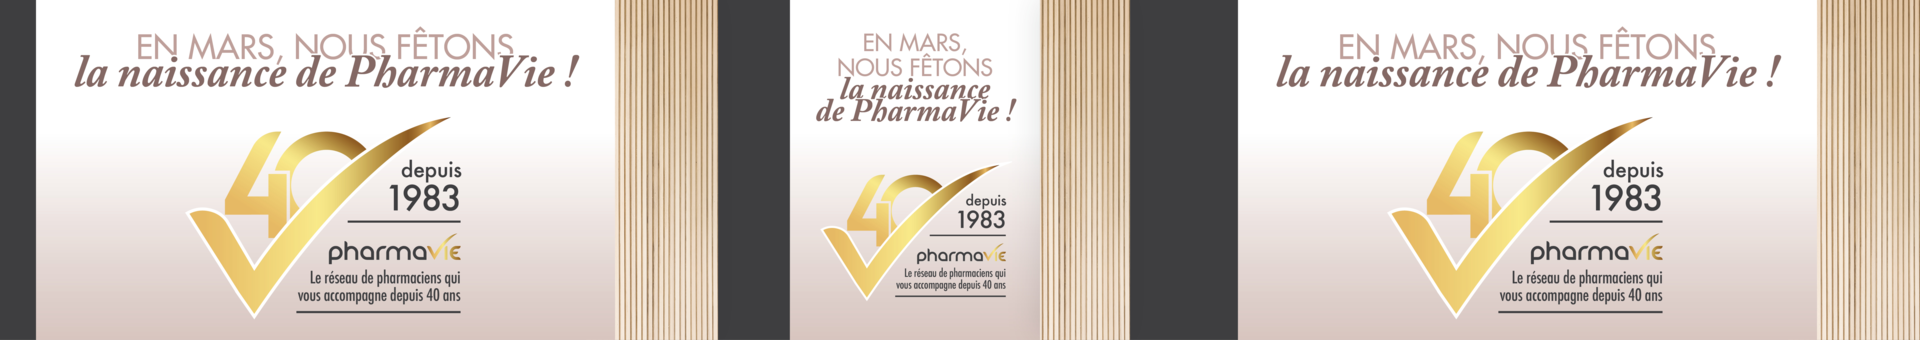 Pharmacie Saint Pierre,Gradignan